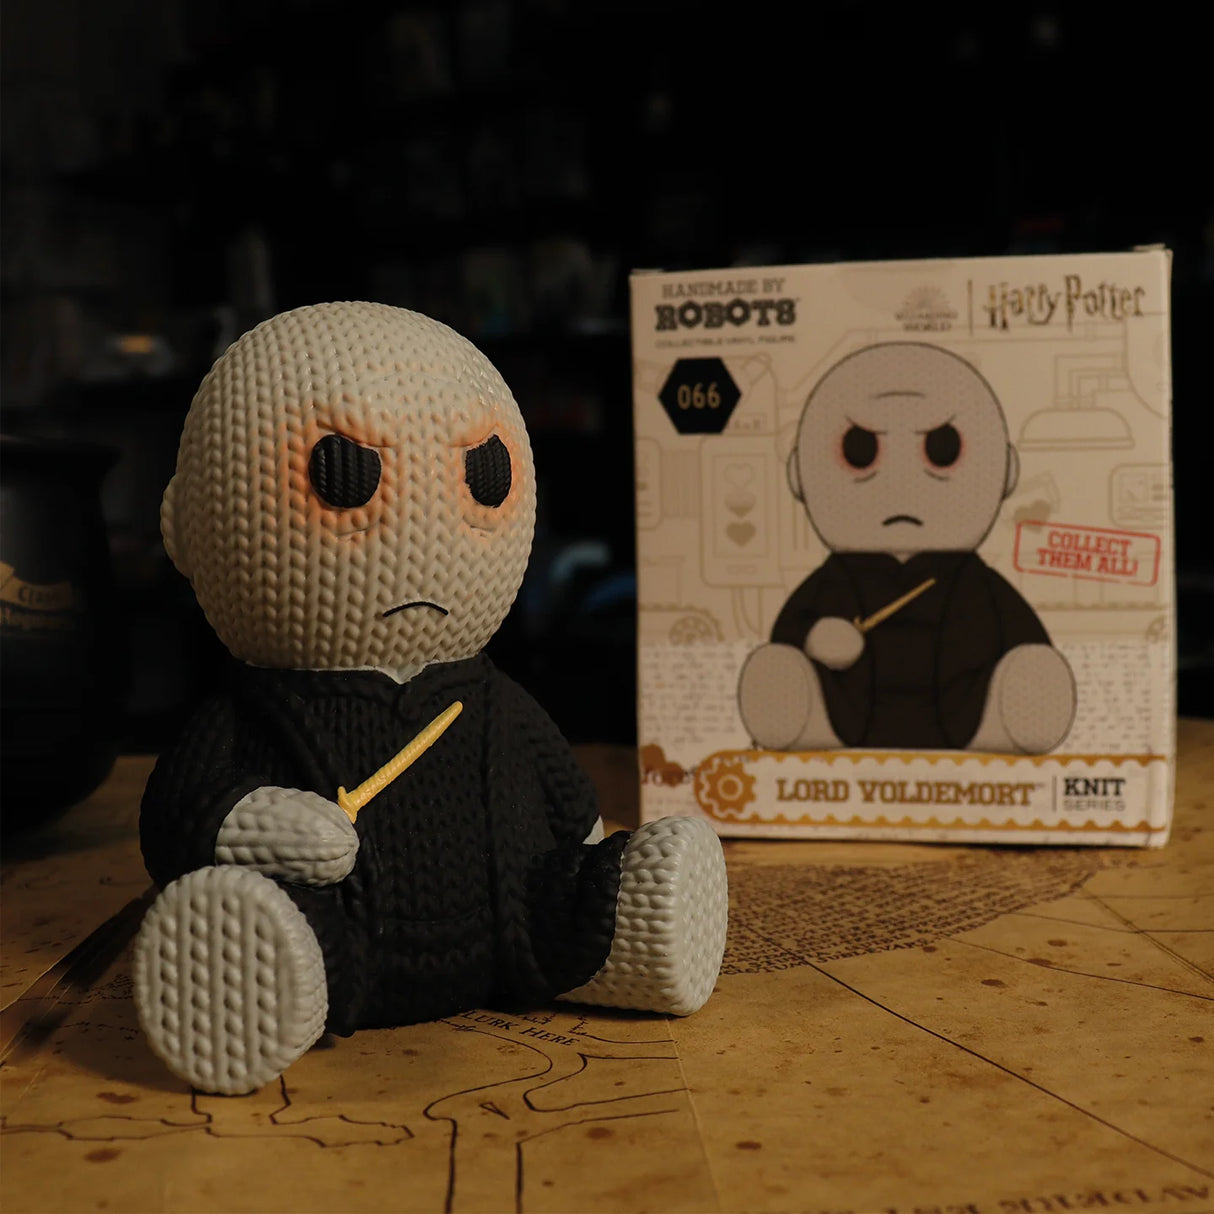 Lord Voldemort | Handmade by Robots | Harry Potter | Vinyl Figure | Knit Series #066